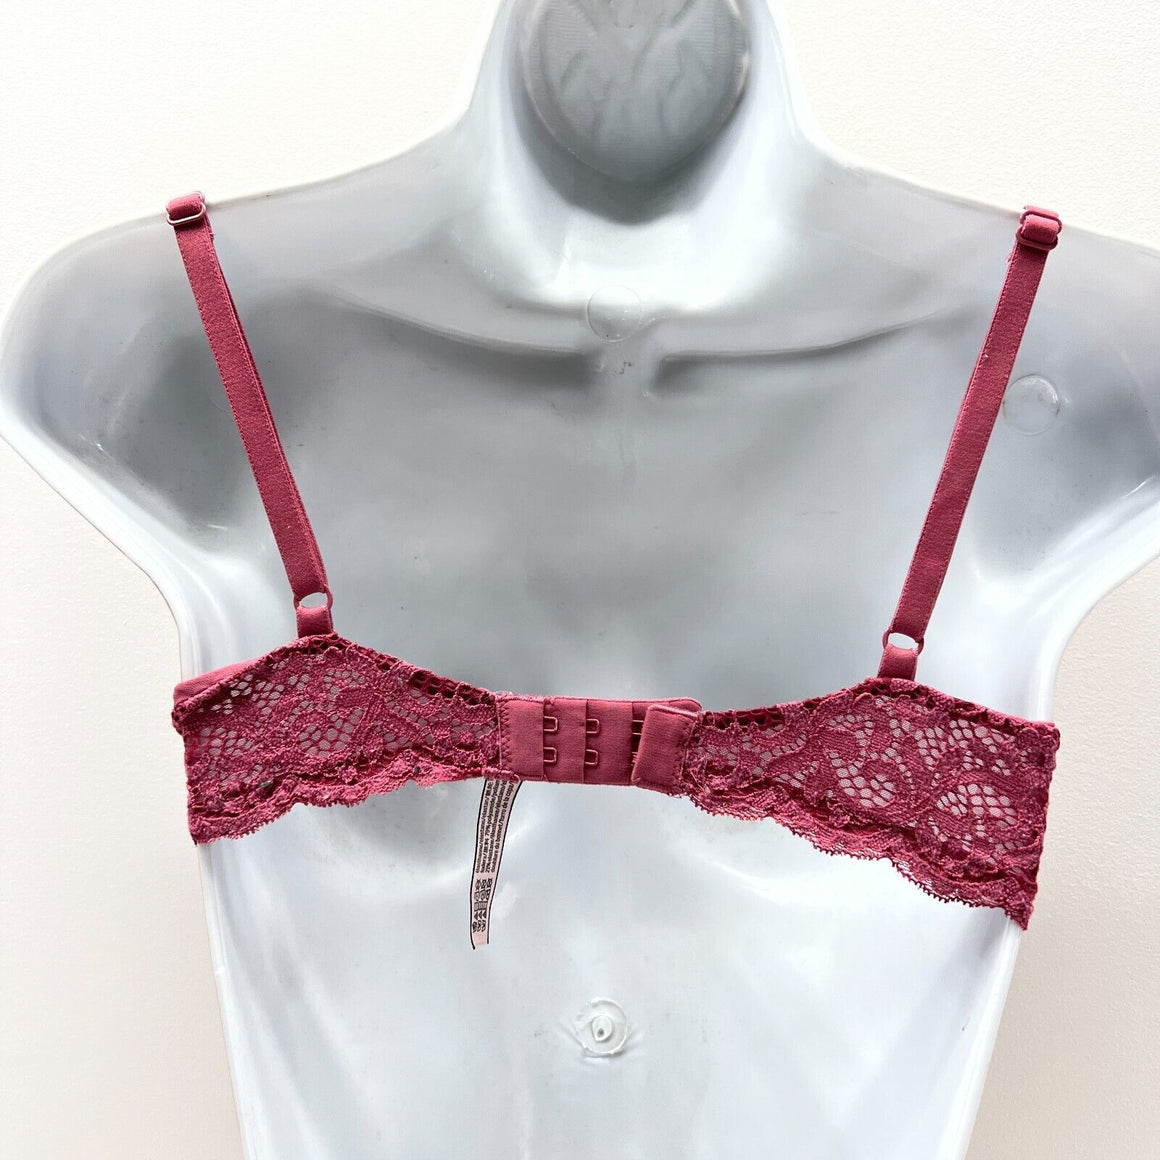 Victoria's Secret unined demi bra size 34C